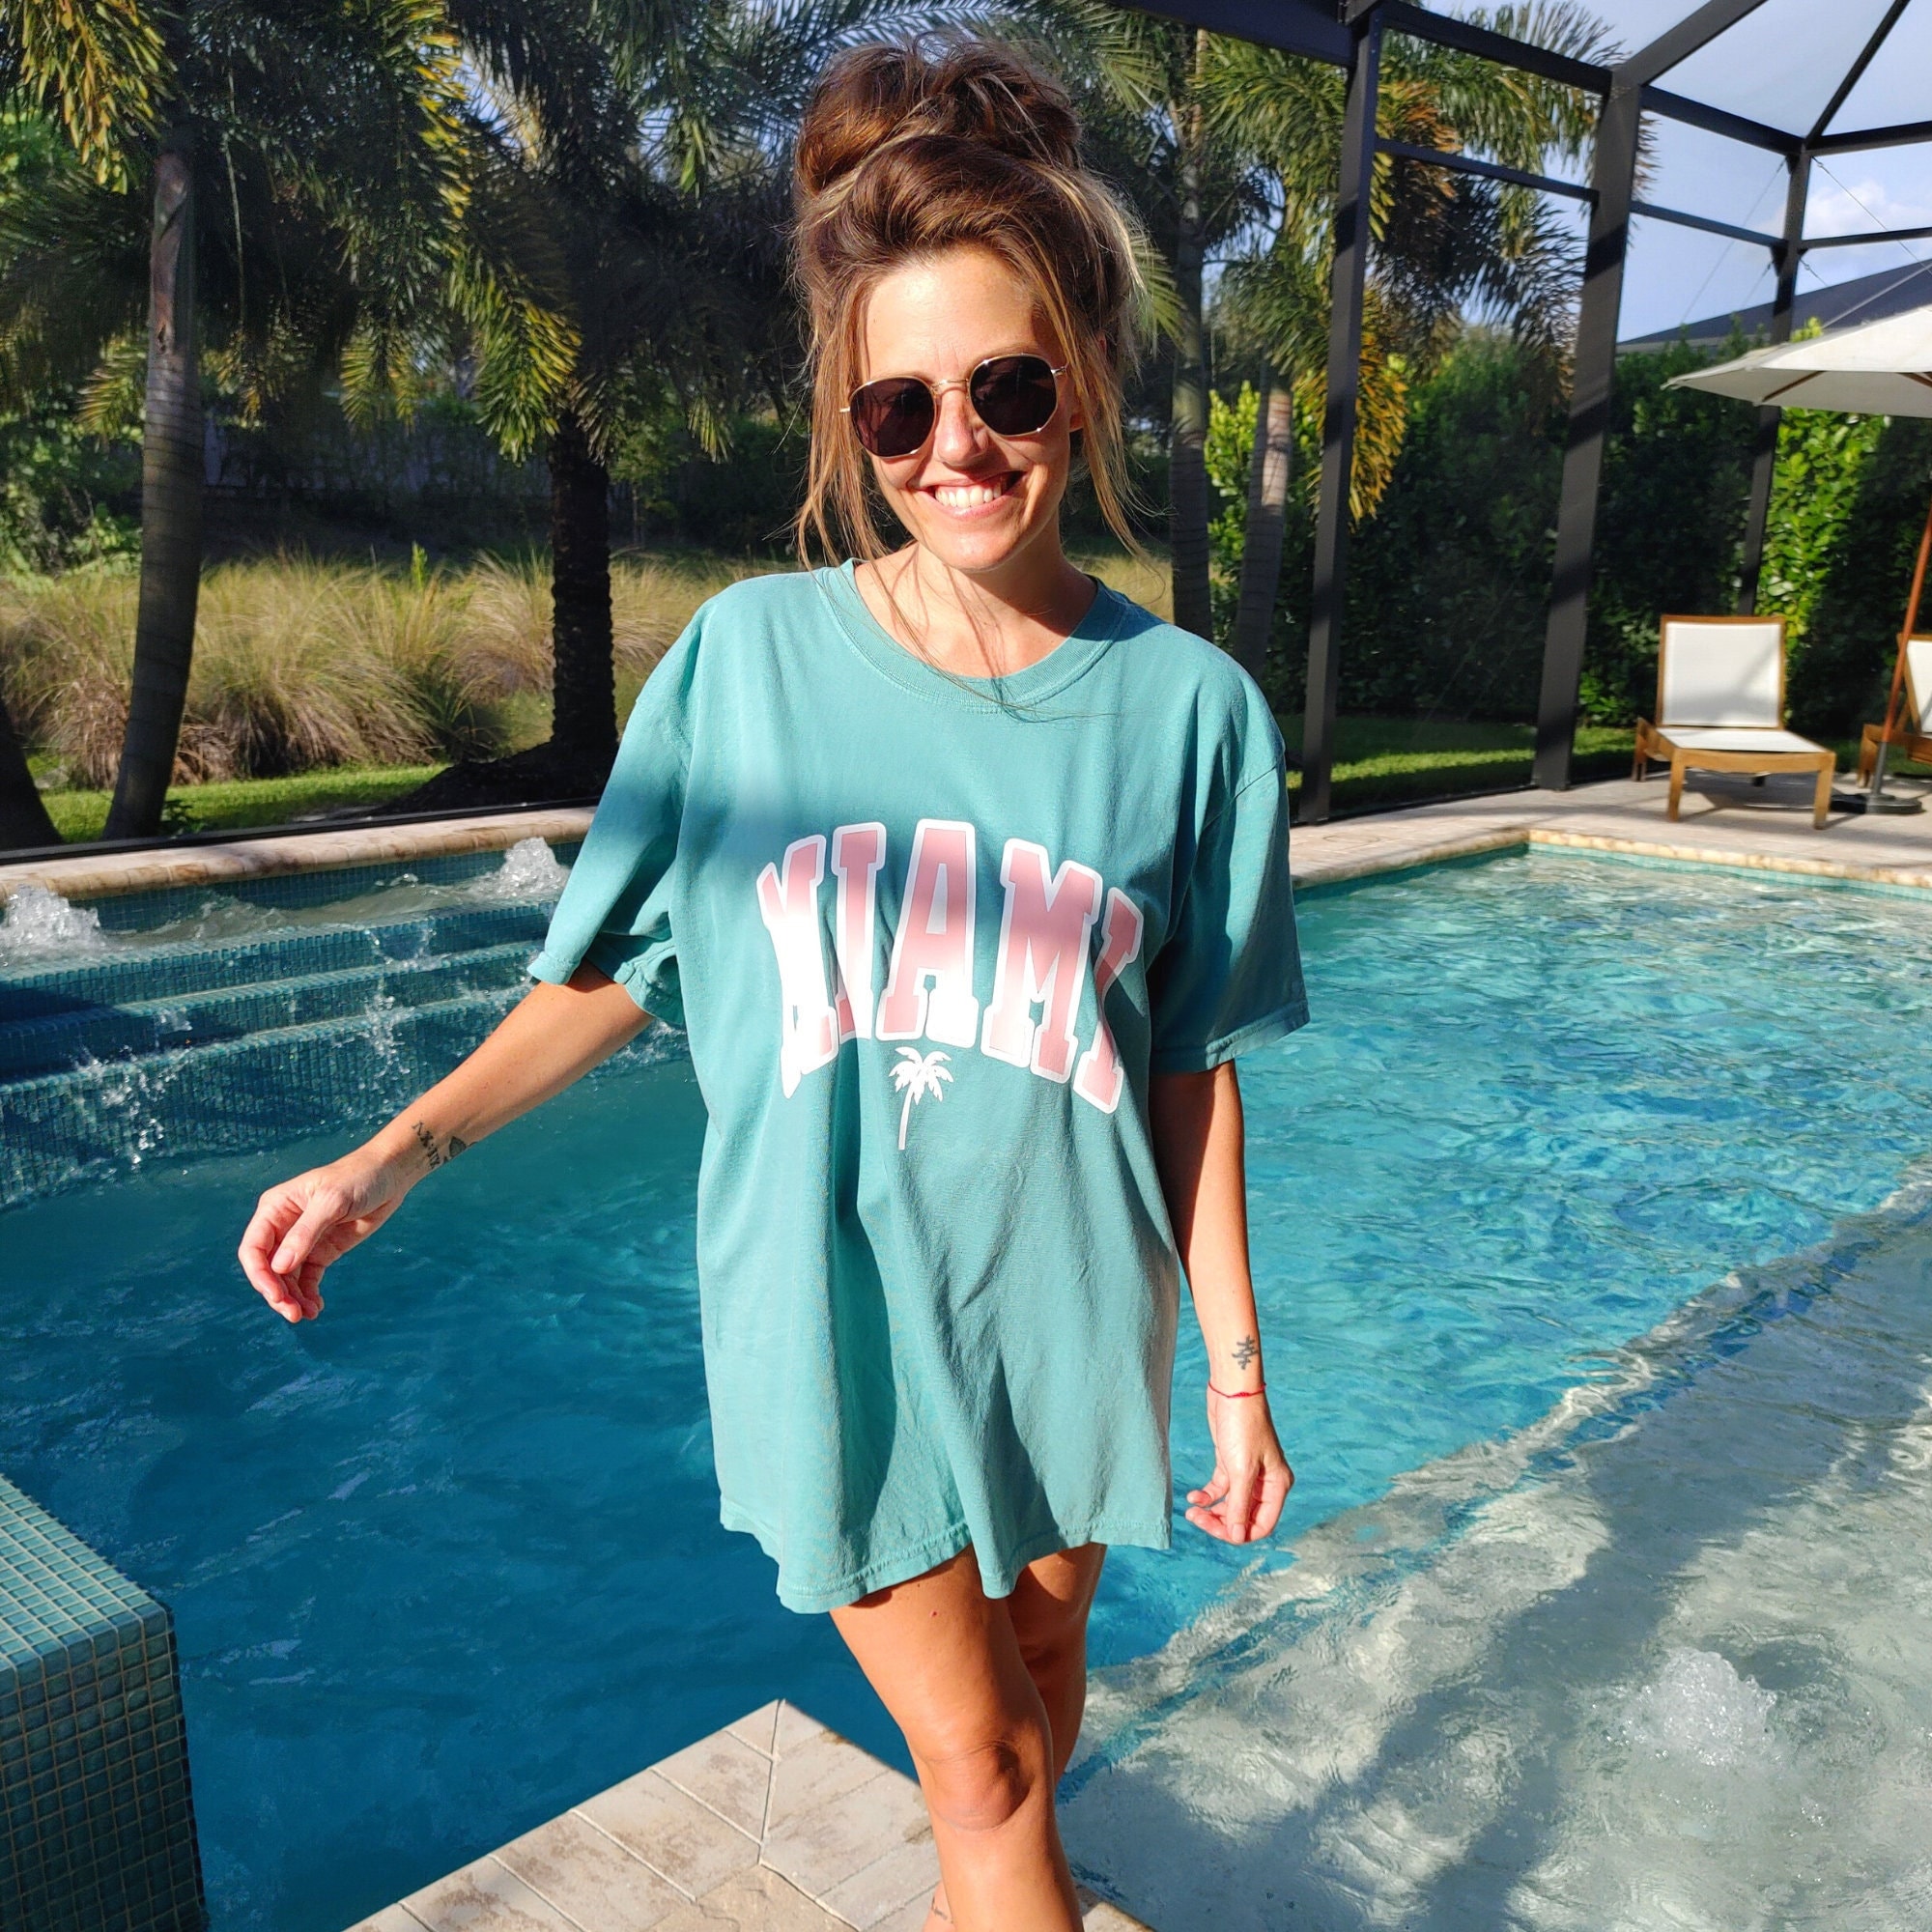  Miami Beach Florida Summer Time T-Shirt : Clothing